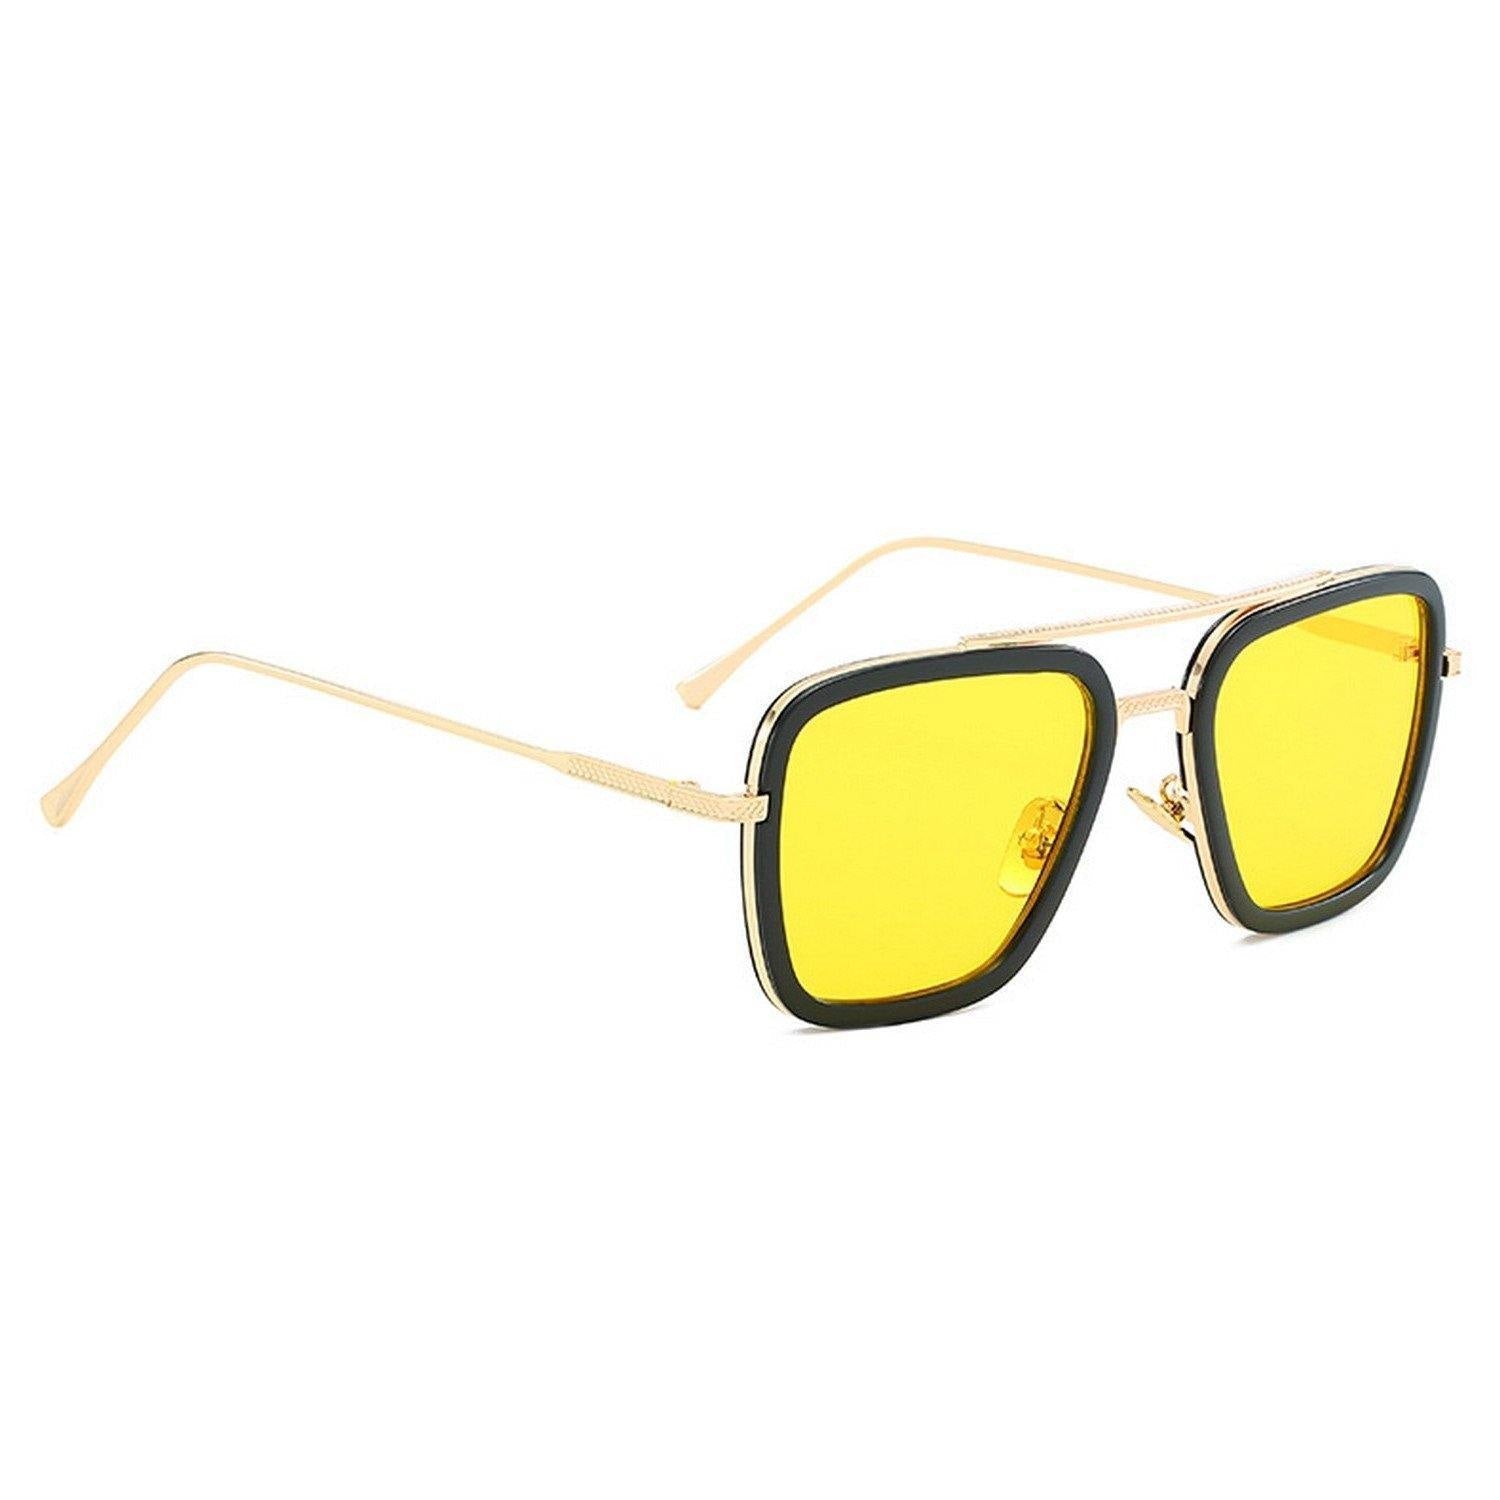 Dervin Tony Stark Sunglasses for Men (Yellow) - Dervin